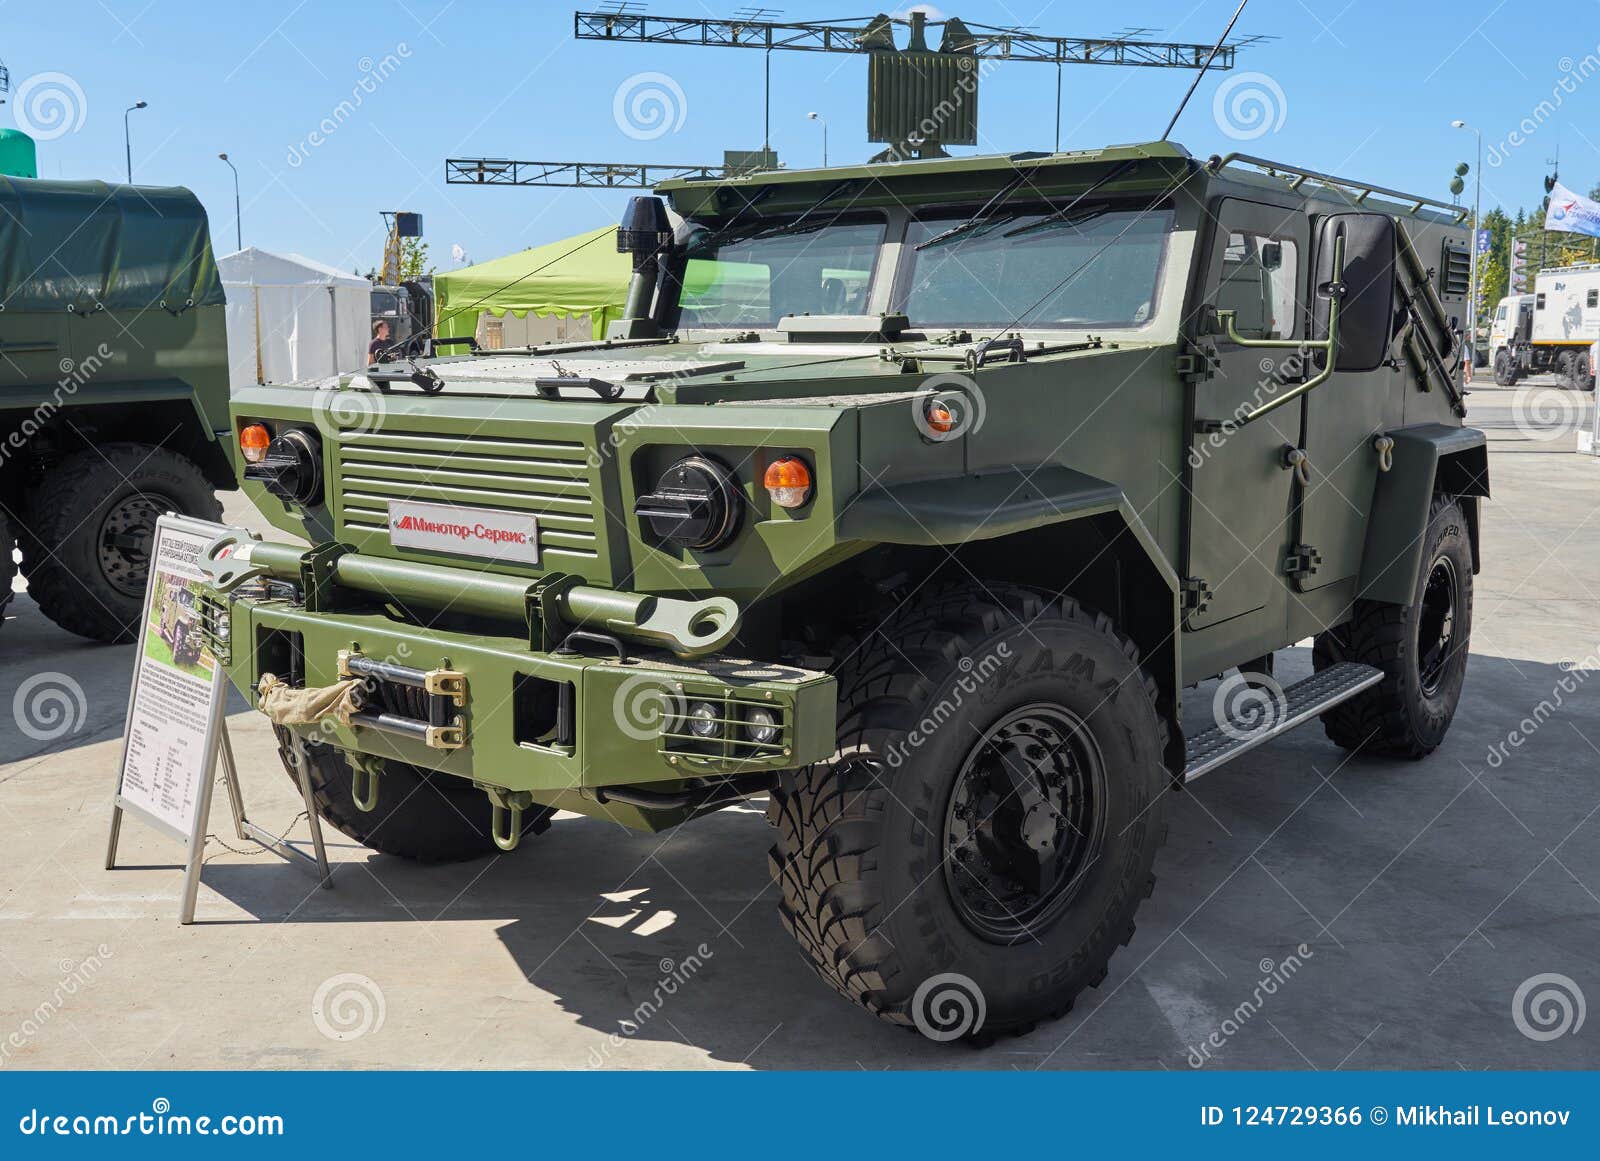 https://thumbs.dreamstime.com/z/kubinka-russia-aug-special-military-multipurpose-off-road-truck-vitim-russian-armored-multipurpose-vehicles-cars-exhibition-124729366.jpg